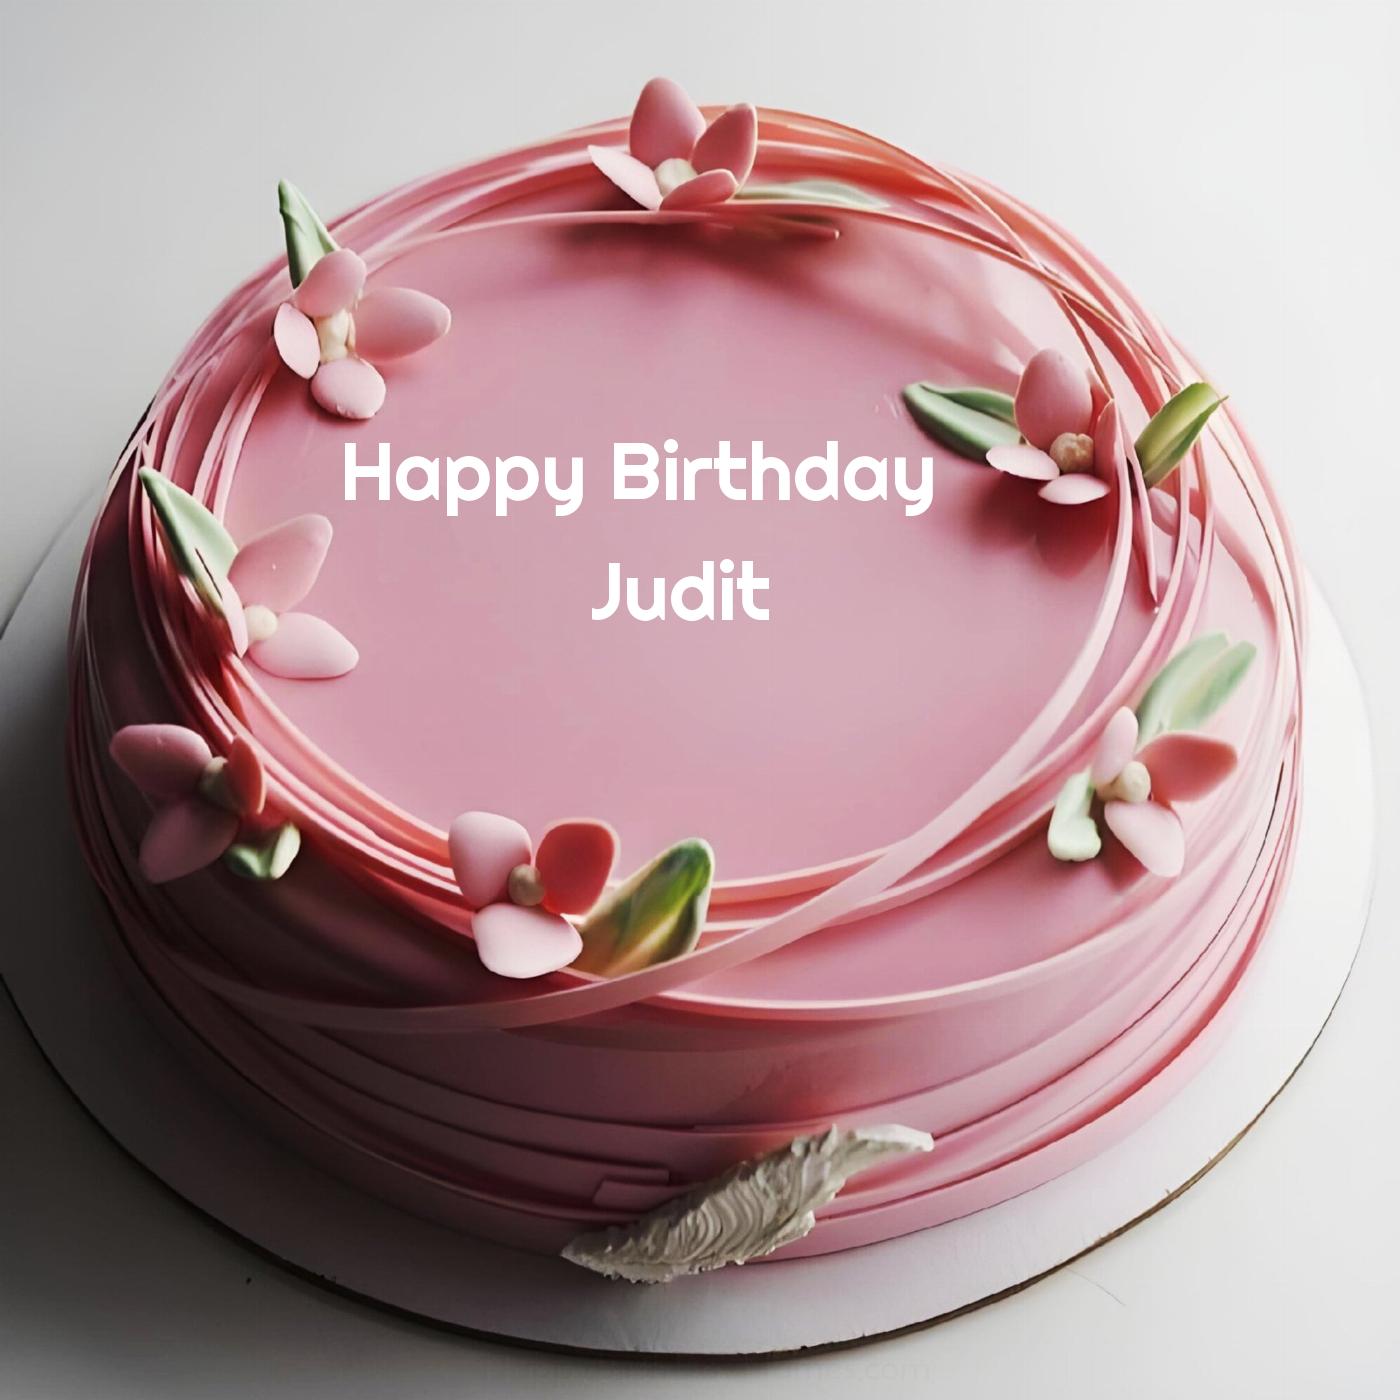 Happy Birthday Judit Pink Flowers Cake